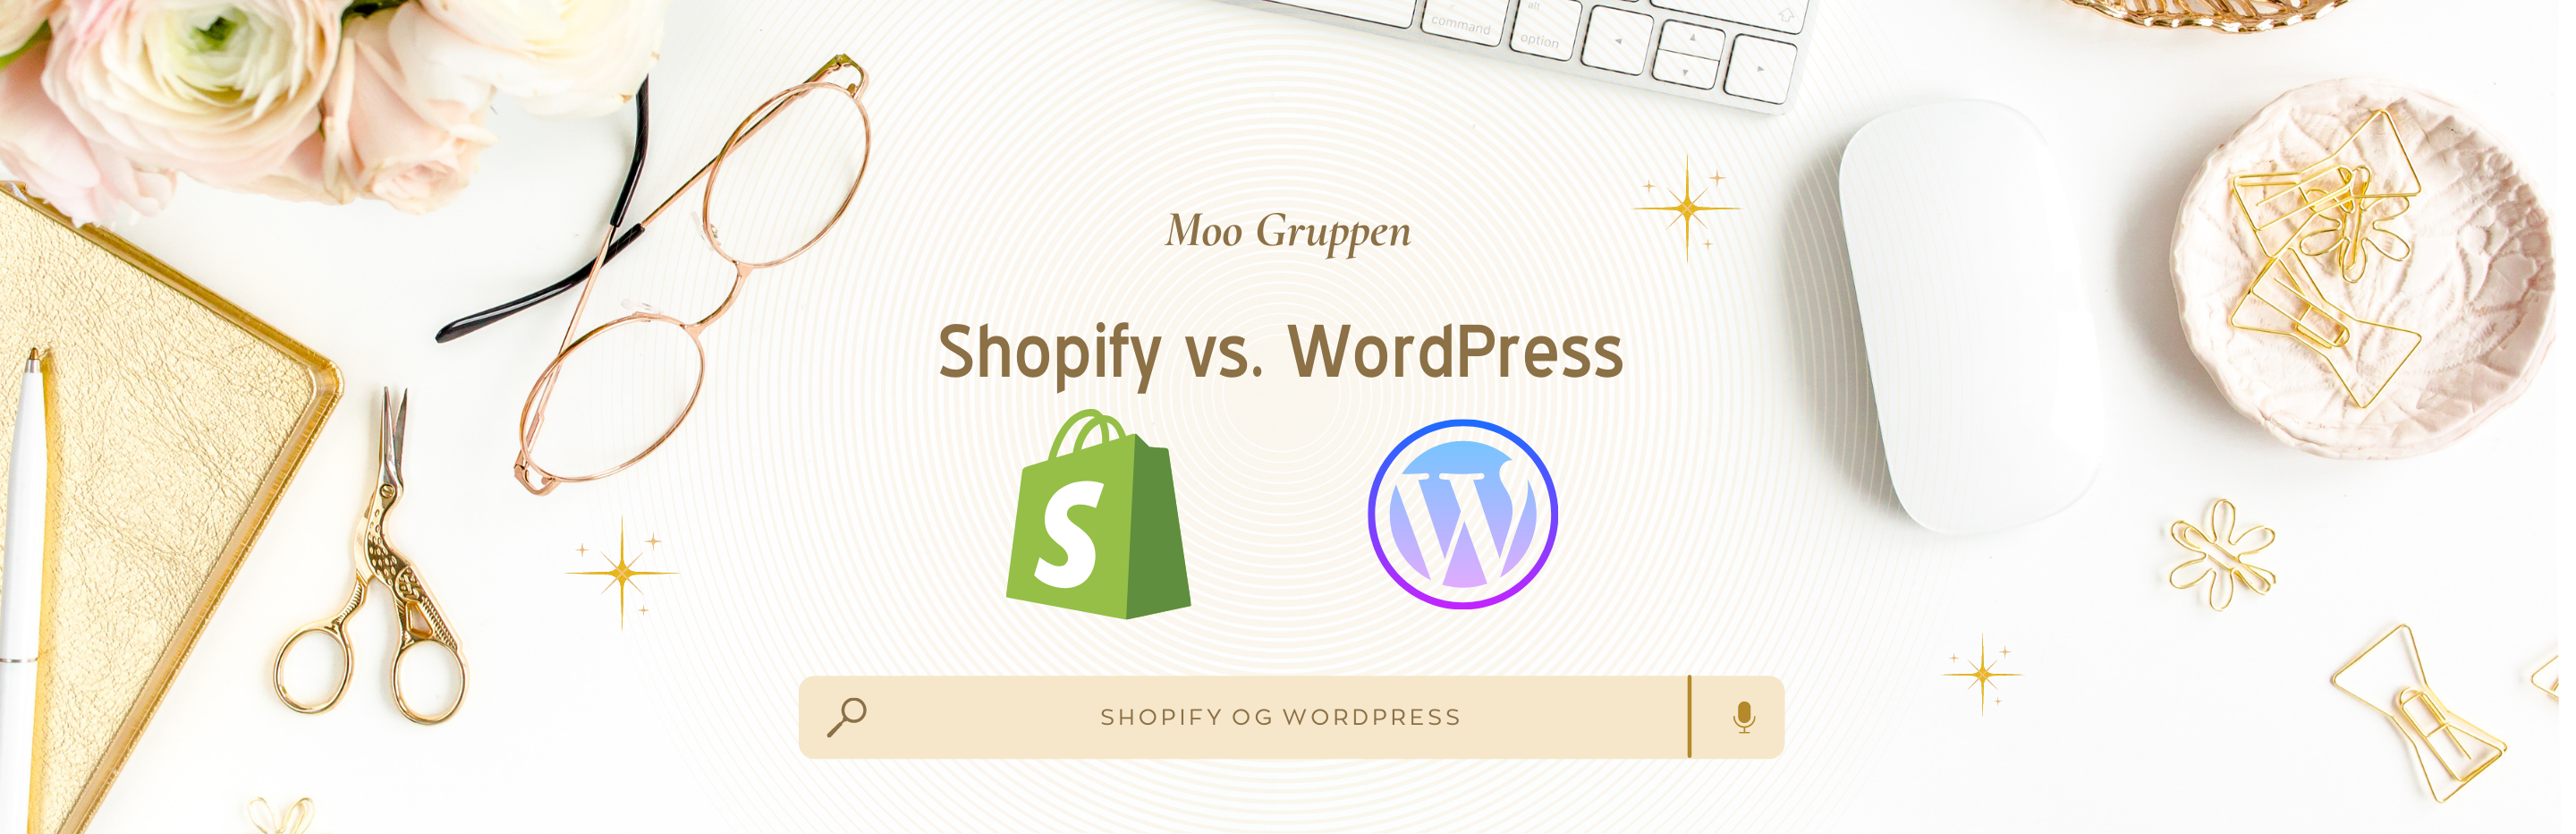 Shopify og WordPress